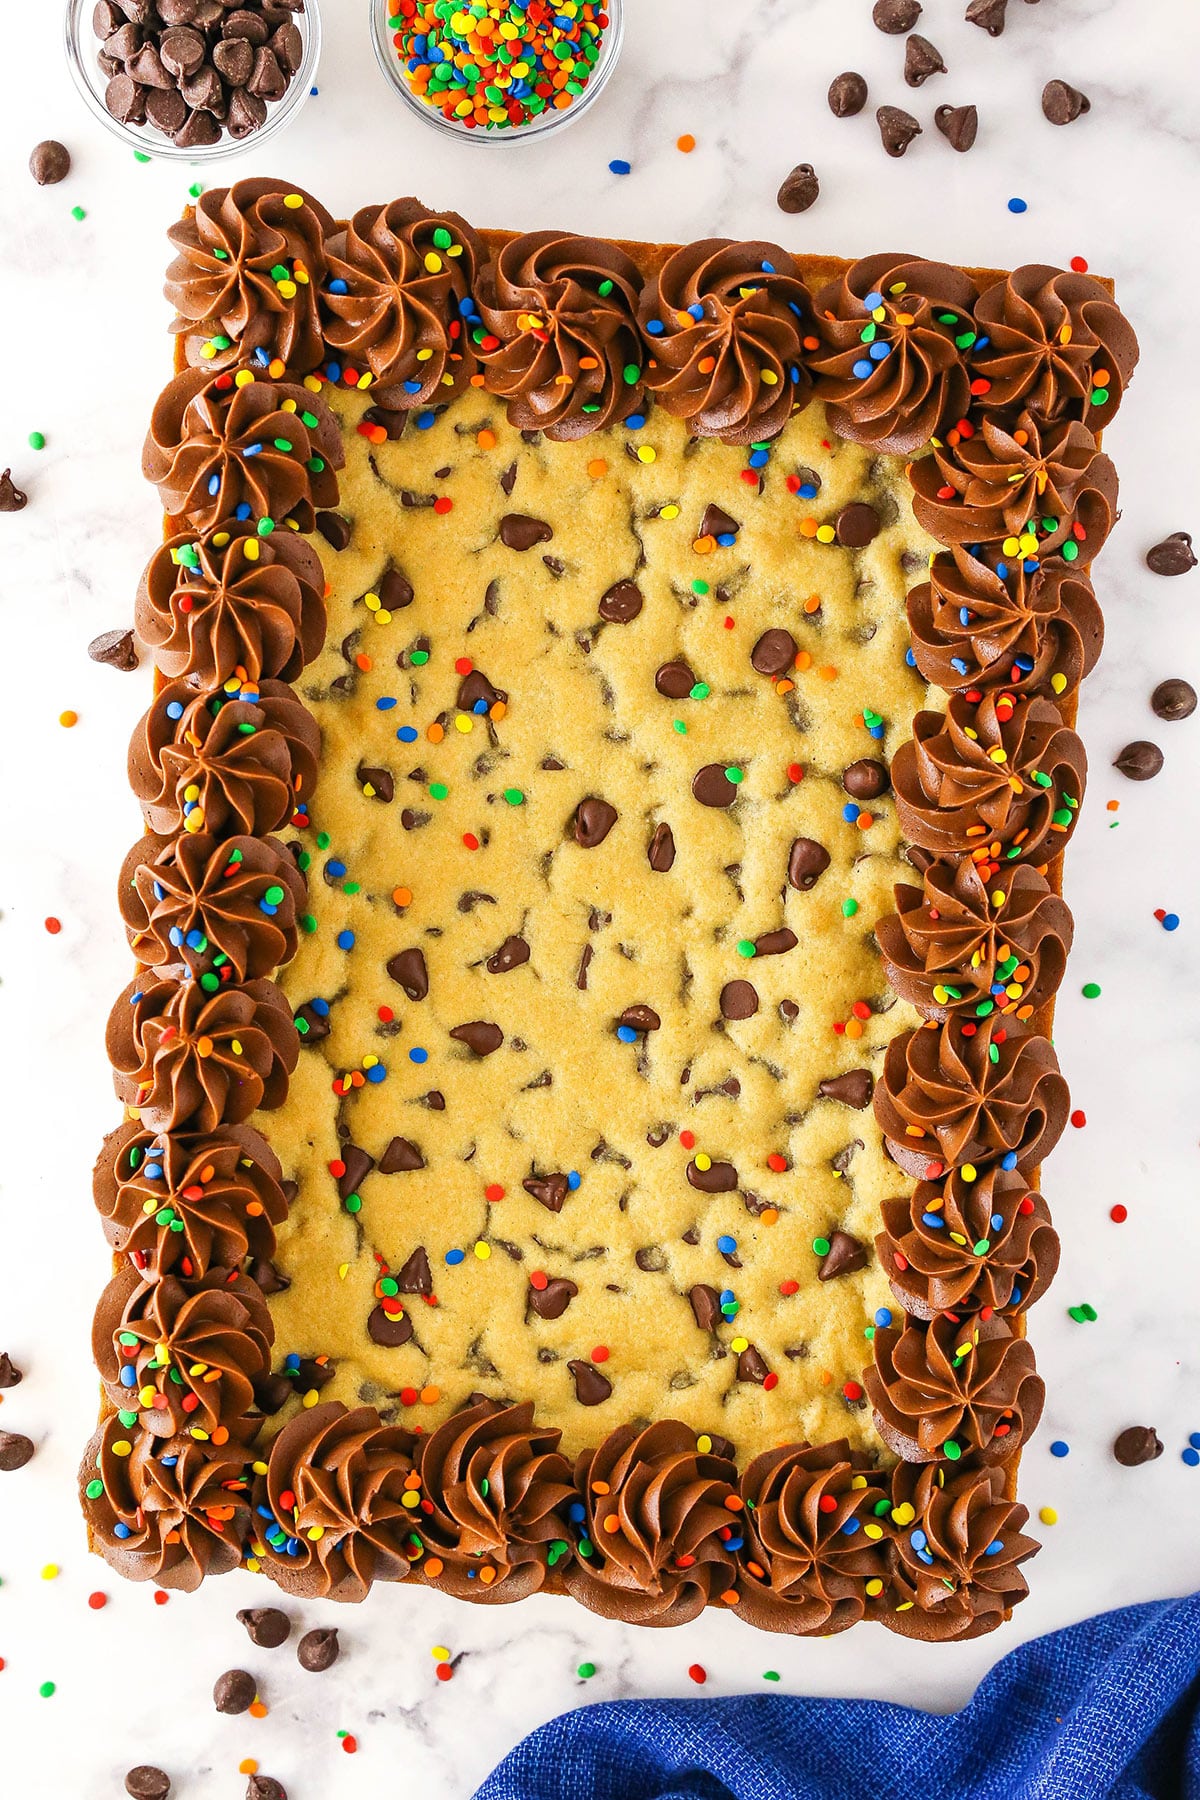 https://www.lifeloveandsugar.com/wp-content/uploads/2022/07/Sheet-Pan-Chocolate-Chip-Cookie-Cake1.jpg